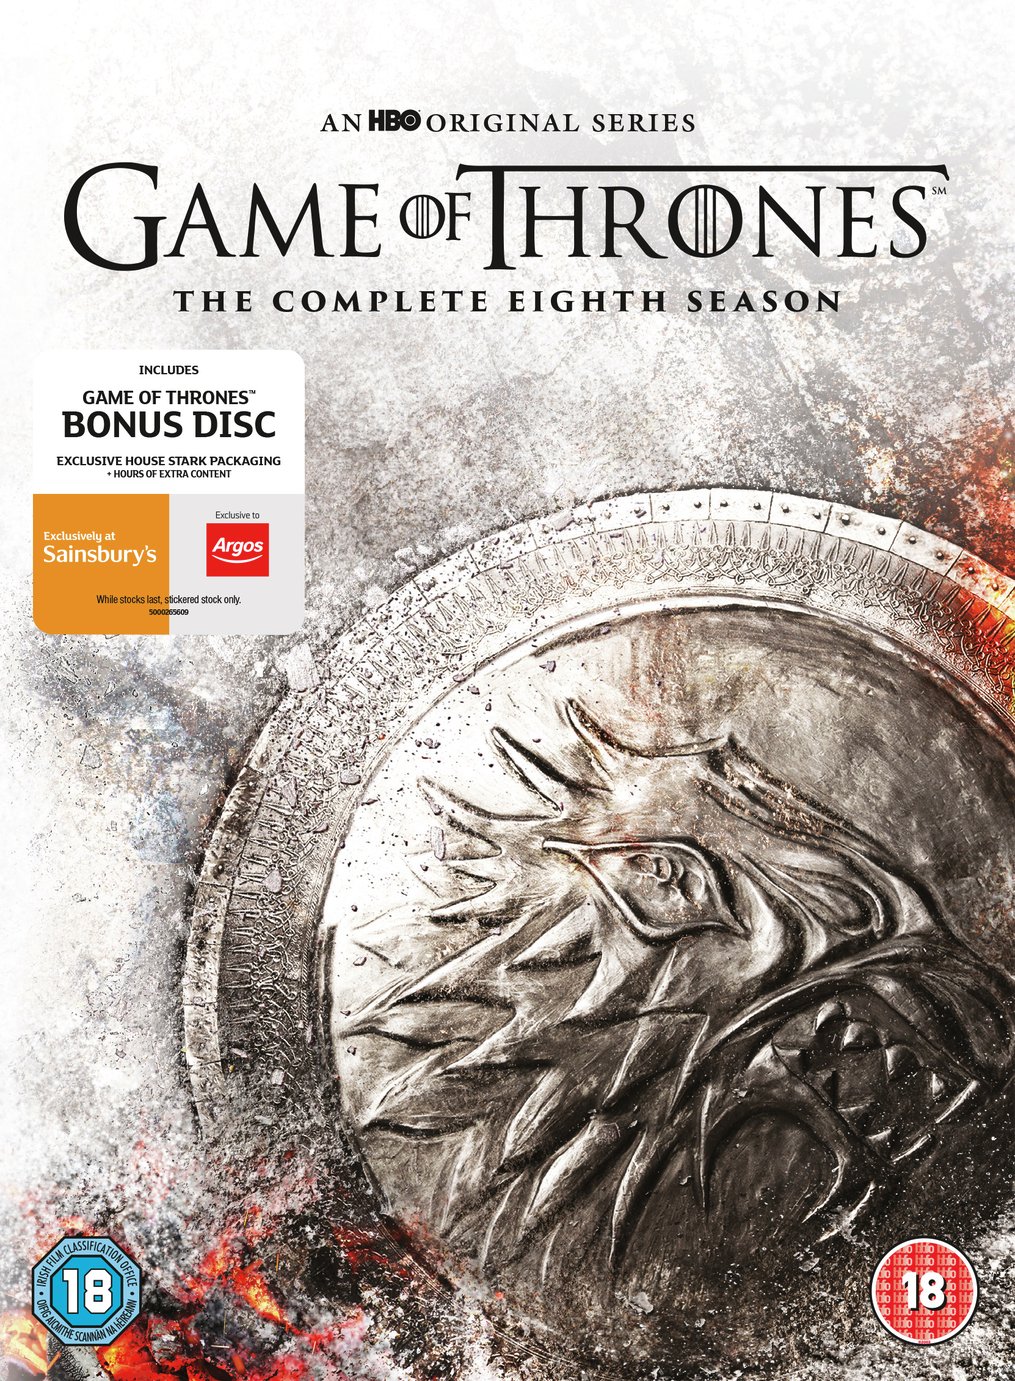 Game of Thrones Season 8 DVD Box Set